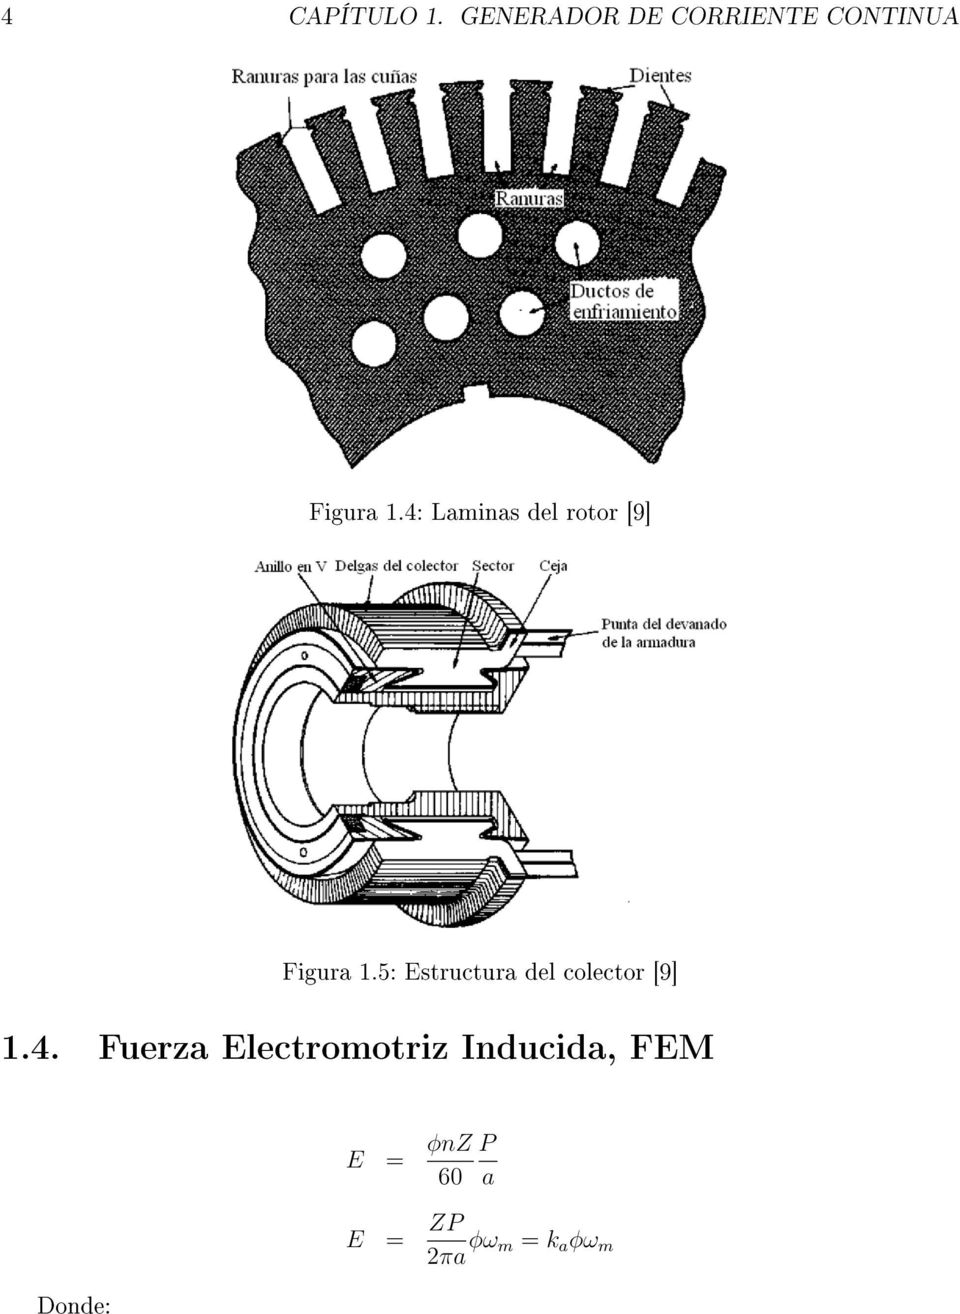 4: Laminas del rotor [9] Figura 1.